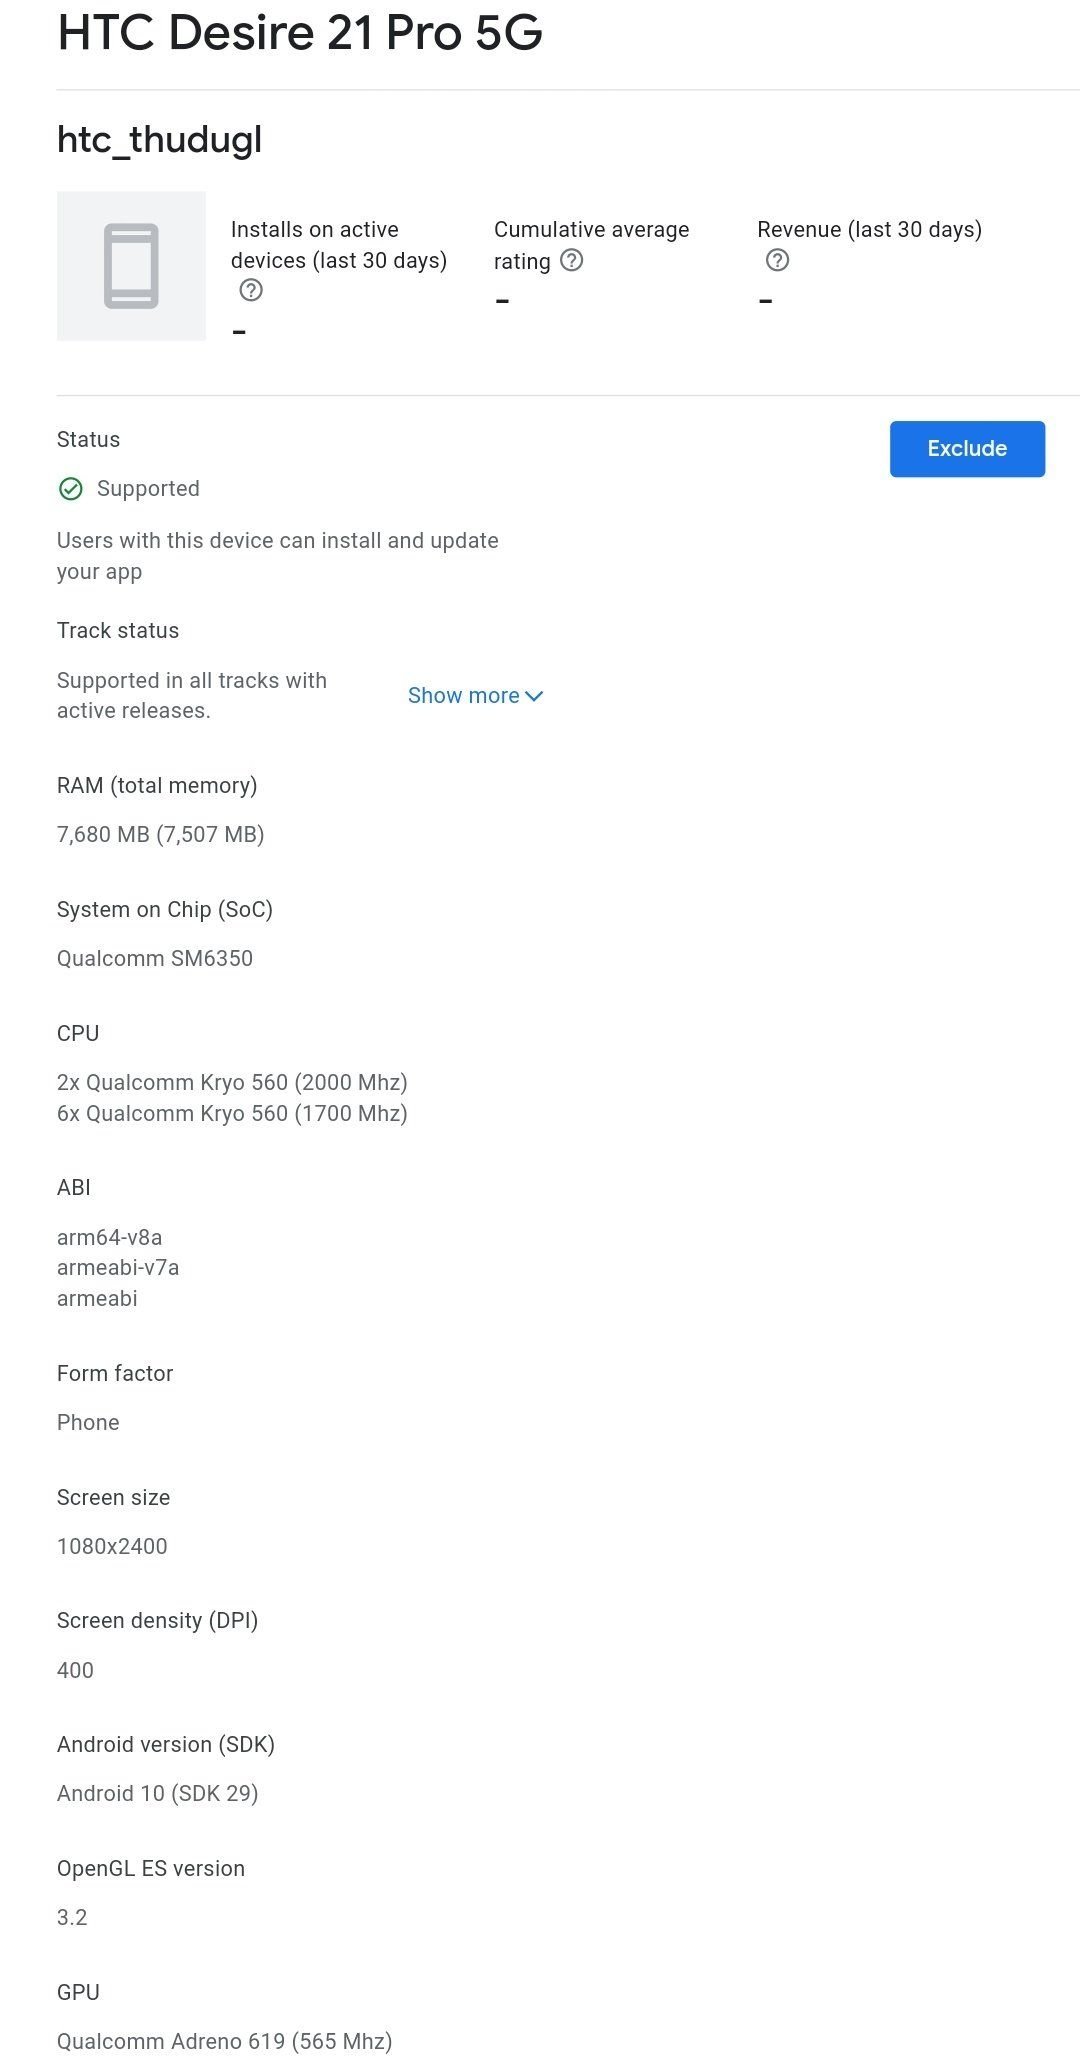 Llistat de la consola de Google Play HTC Desire 21 Pro 5G